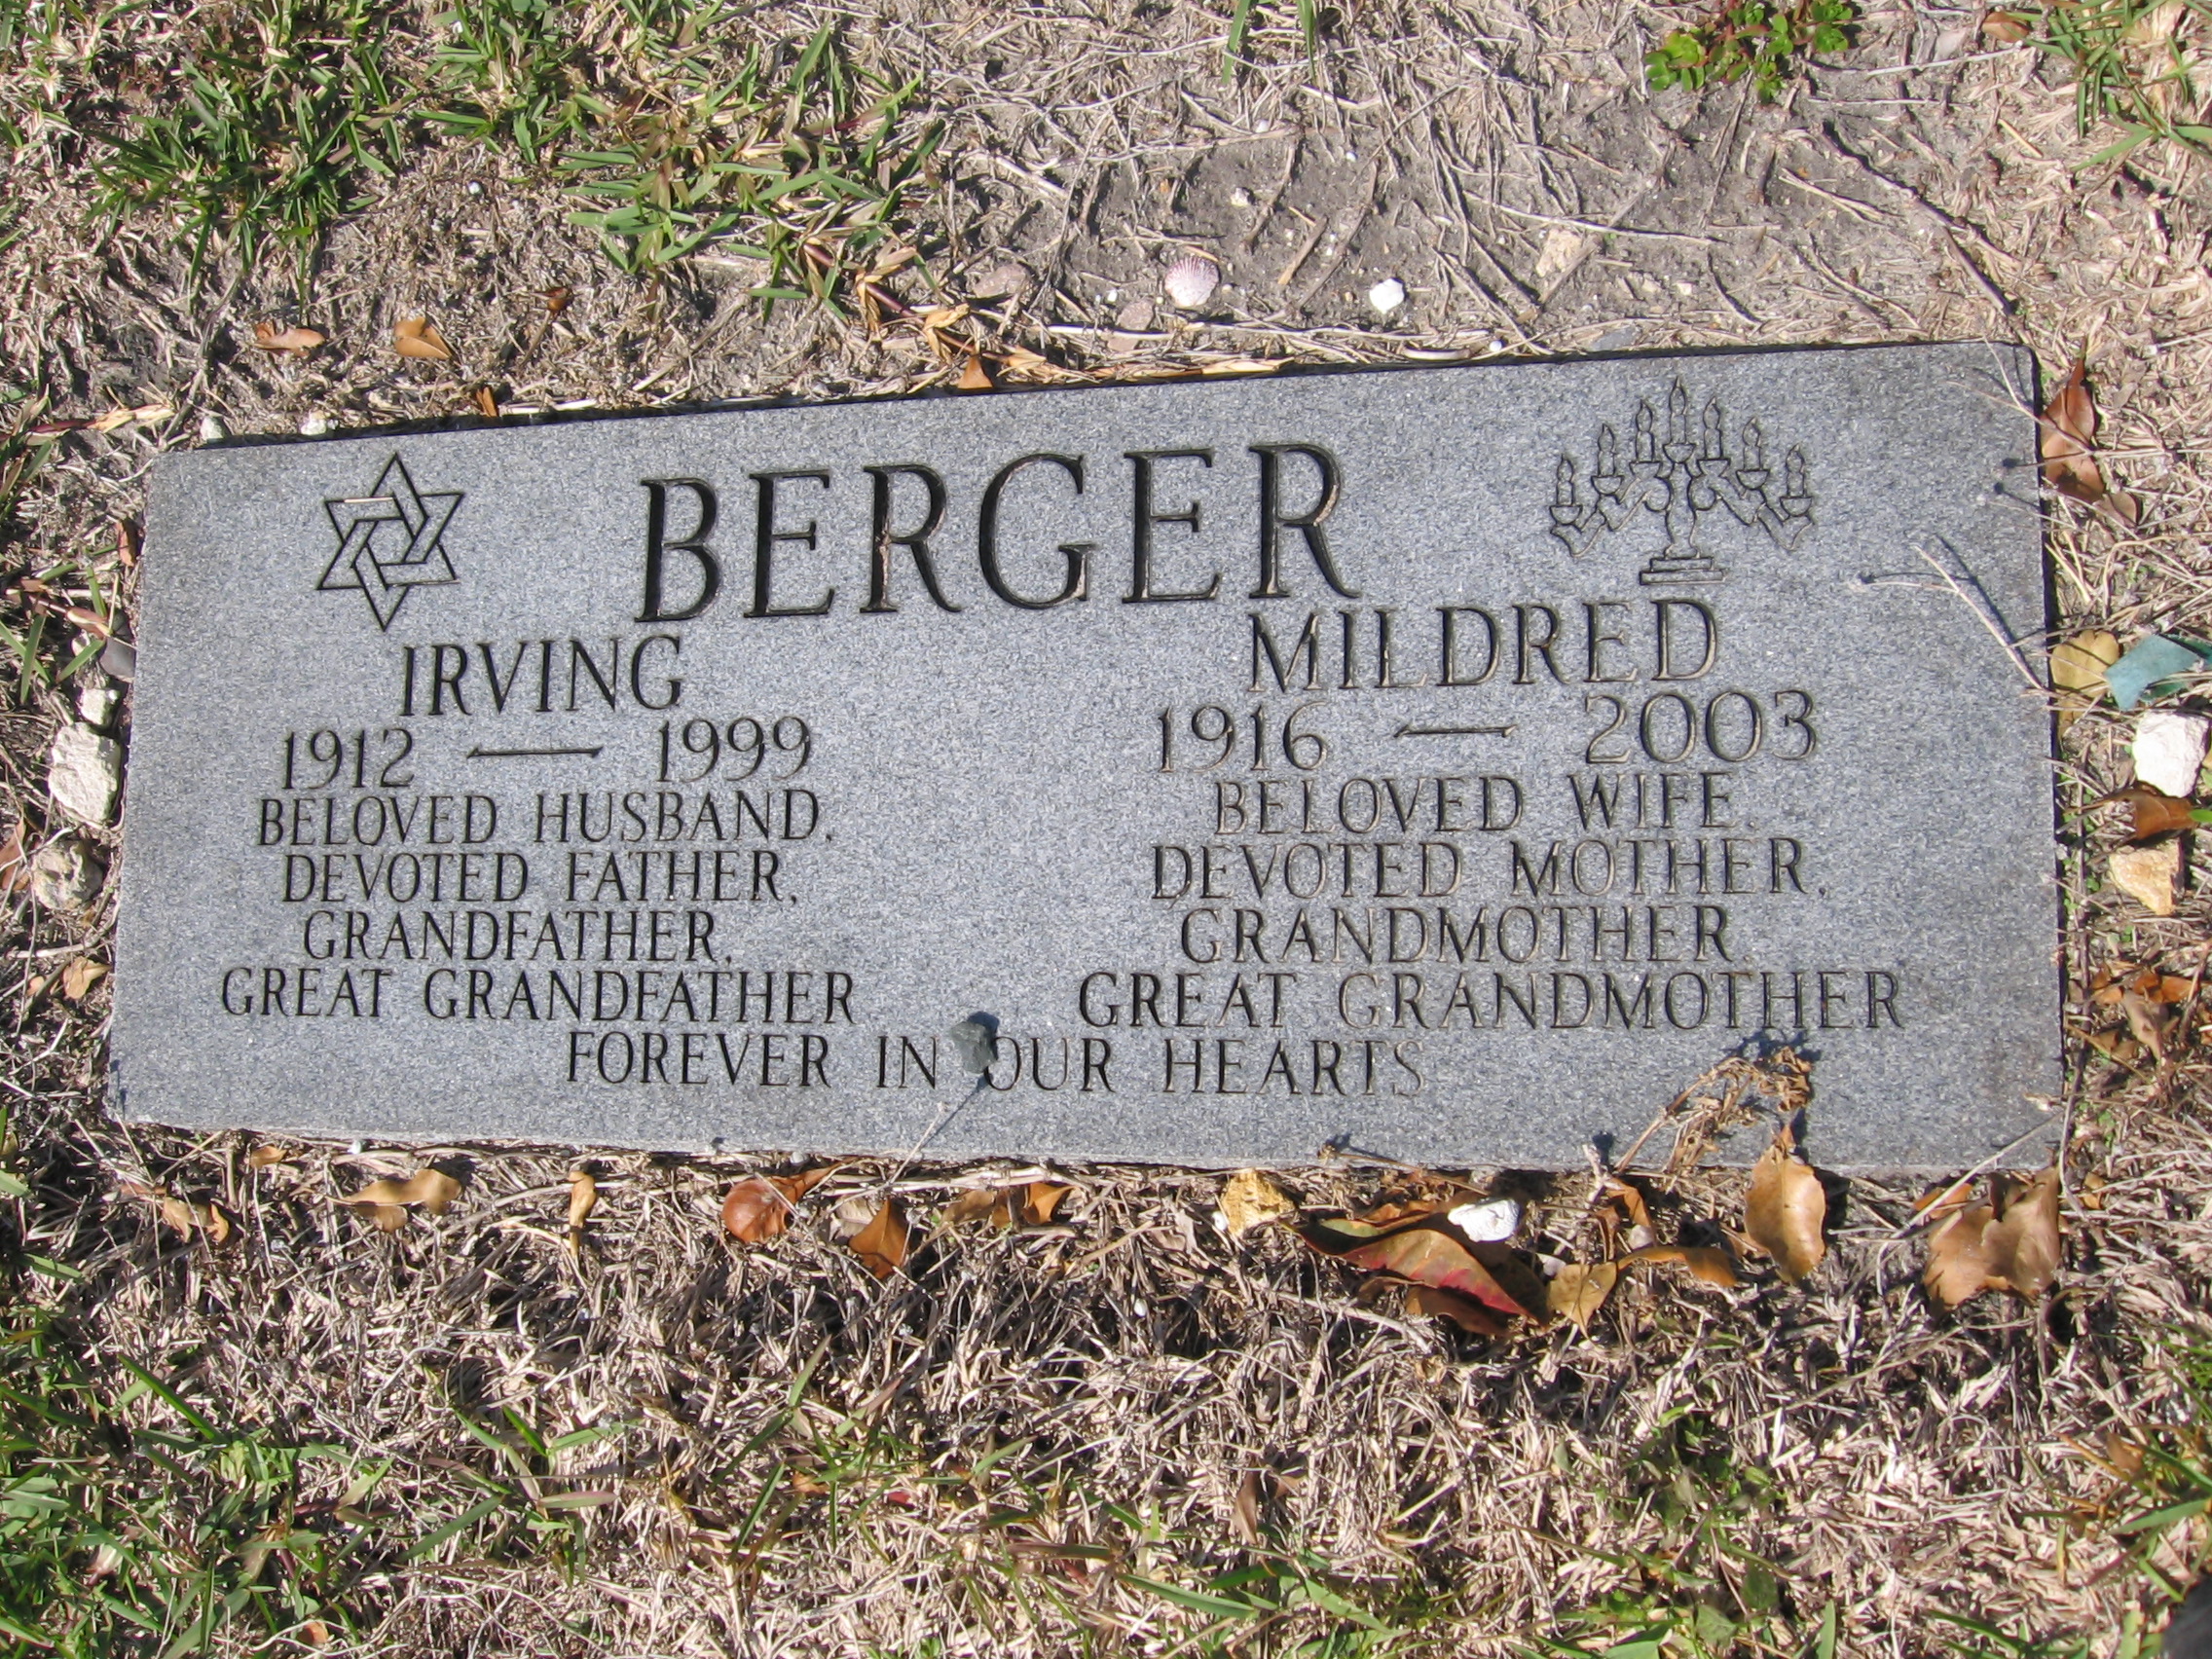 Irving Berger